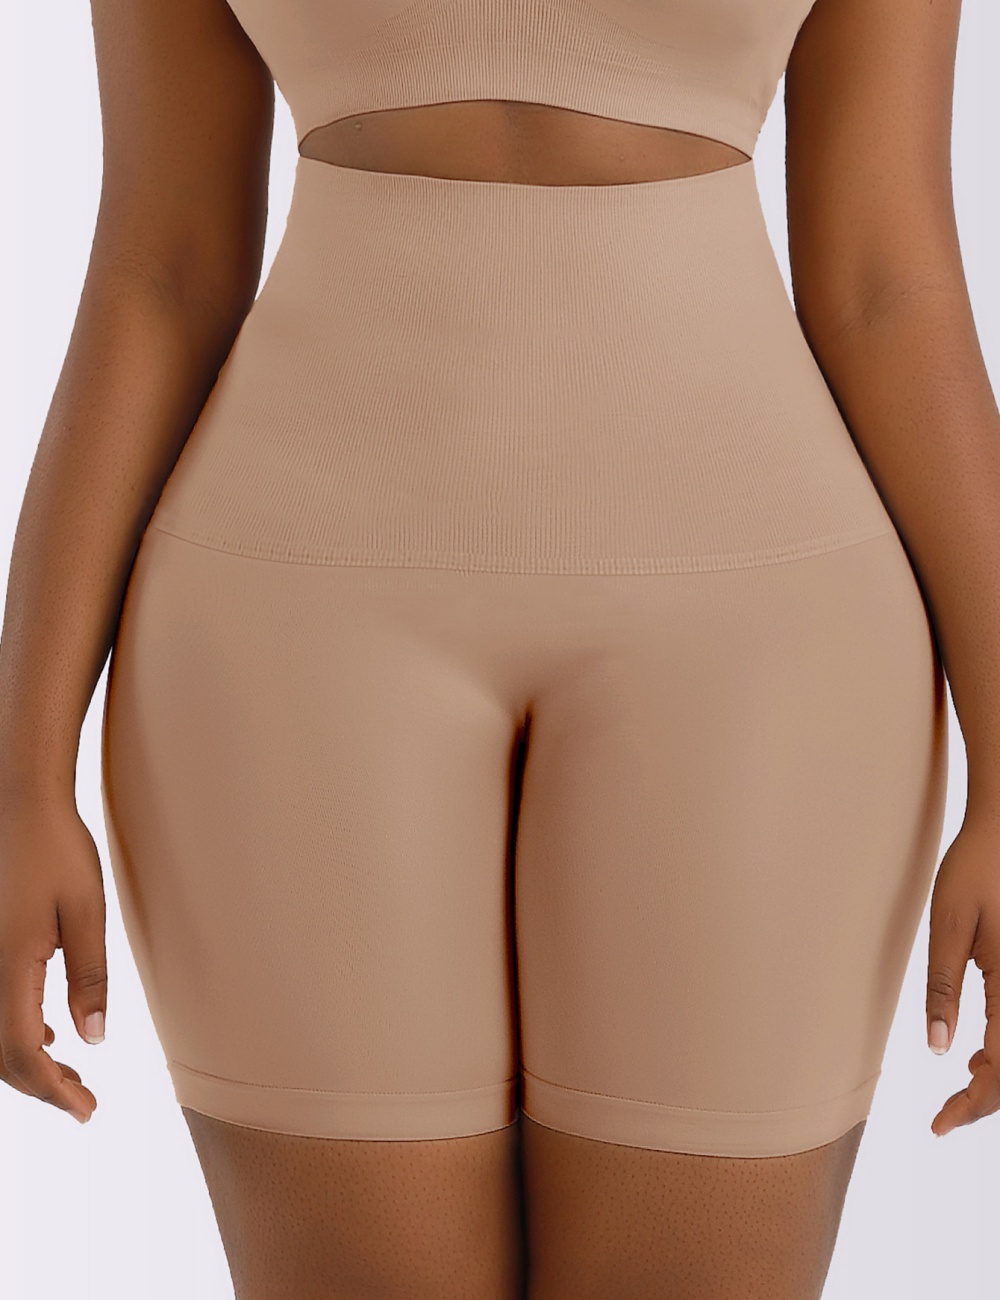 High waist safety pants pants hip raise hold abdomen corset